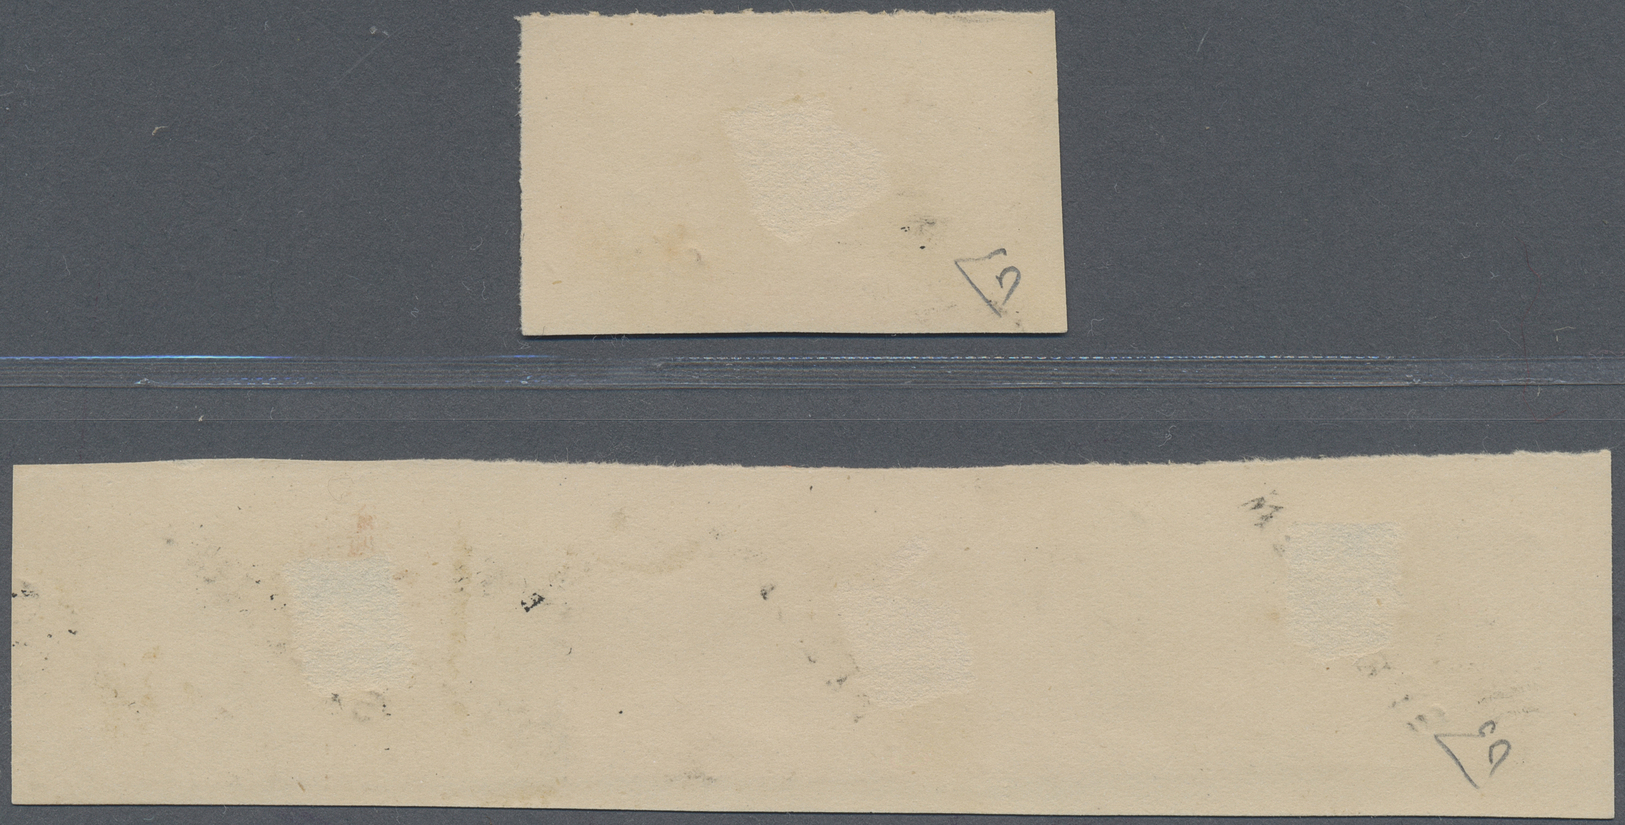 Alawiten-Gebiet - Portomarken: 1925, Postage Due Issue Four Values Tied By U.P.U. Oneliner "SPECIMEN" In Black, Mounted - Autres & Non Classés